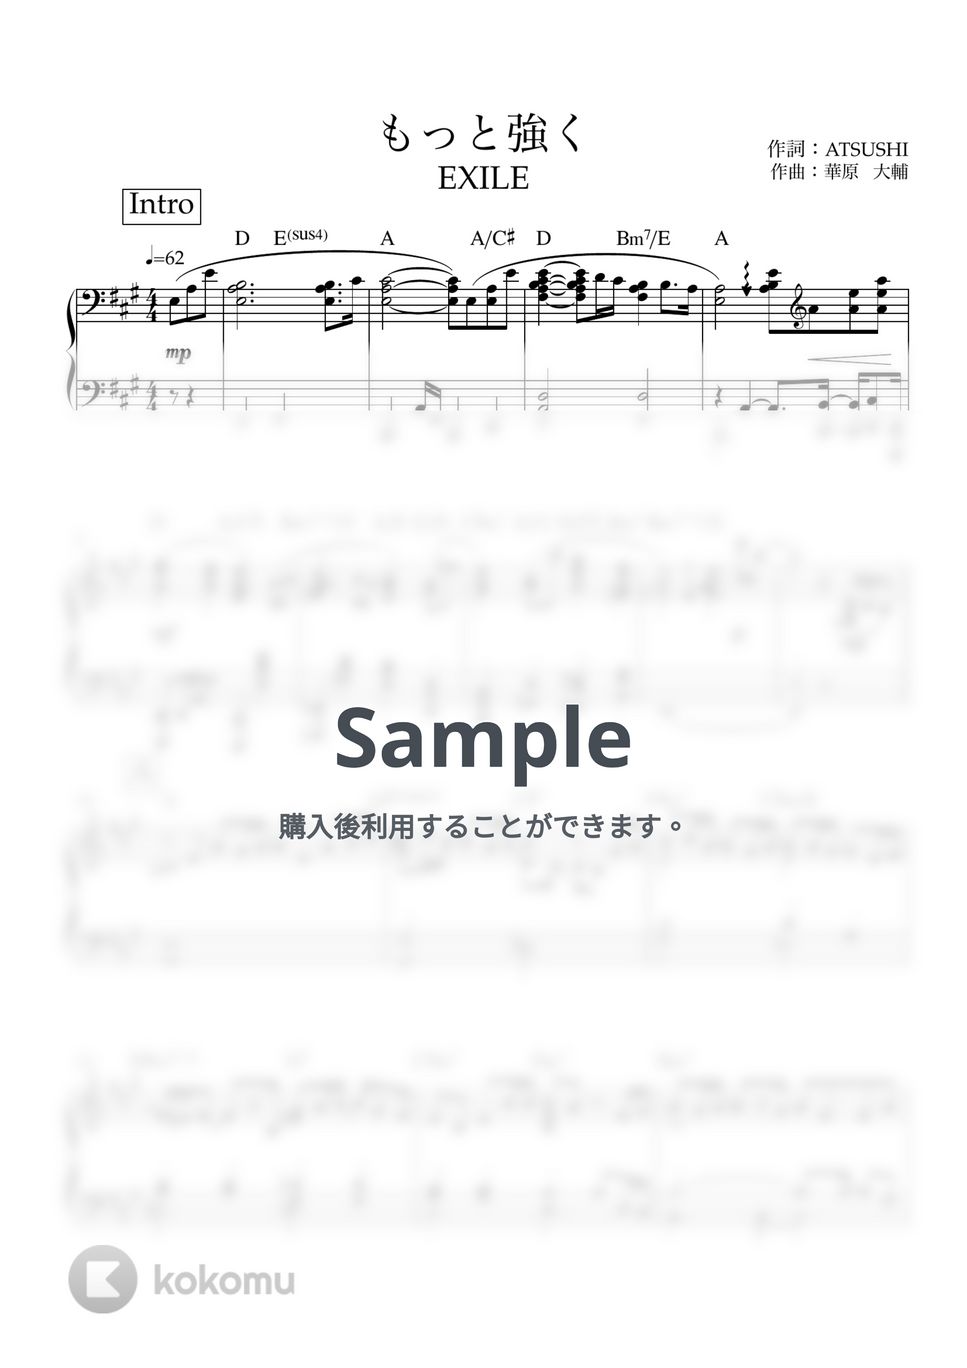 EXILE - もっと強く (ソロピアノ / 上級) by ヒット